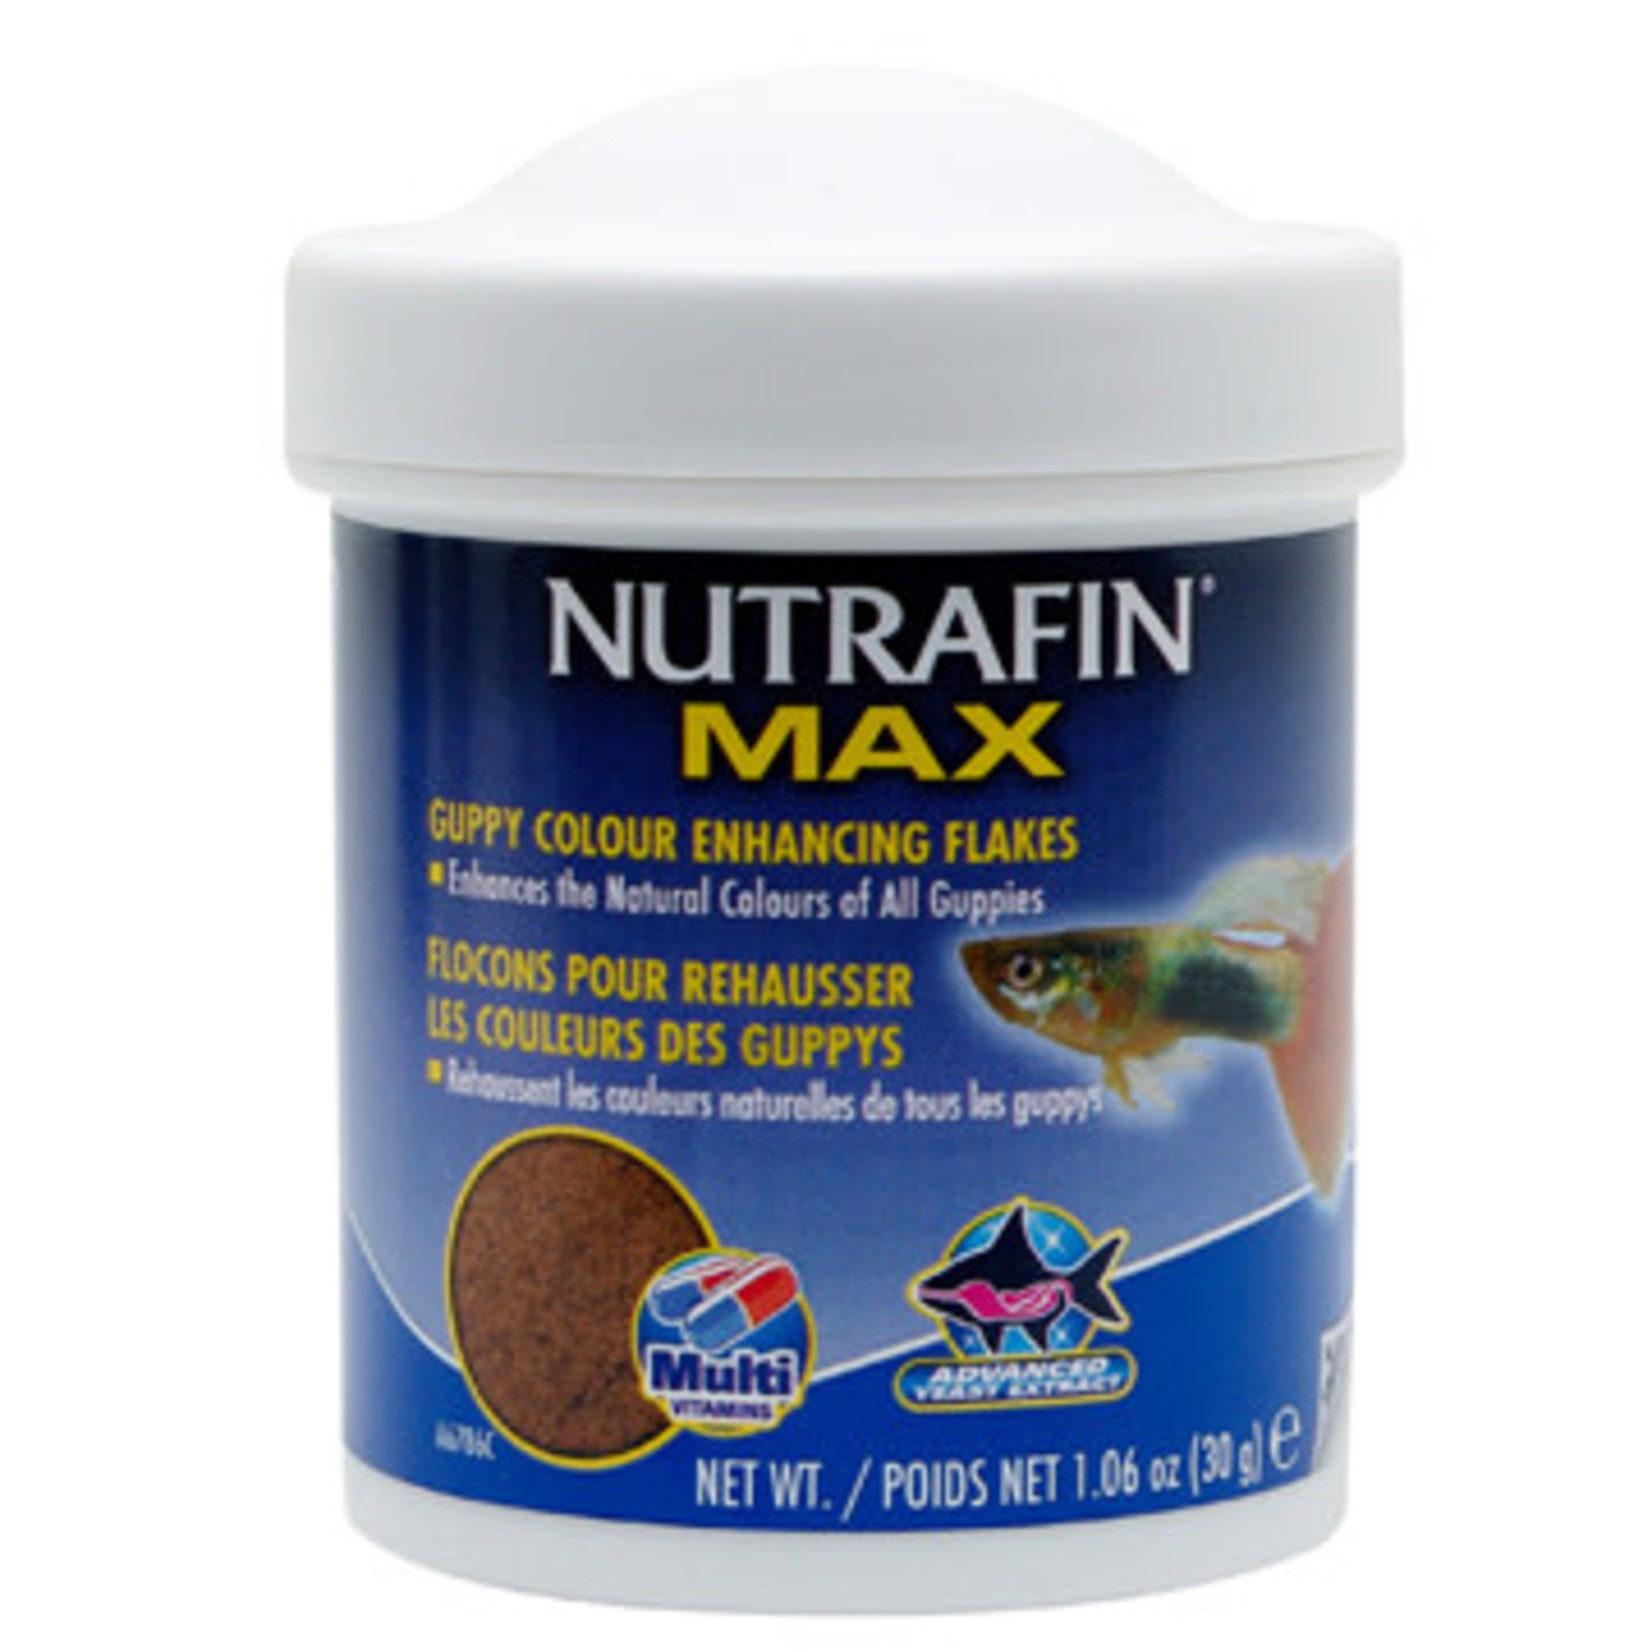 Nutrafin Nutrafin Max Guppy Color Enhancing Flakes 1.06 oz